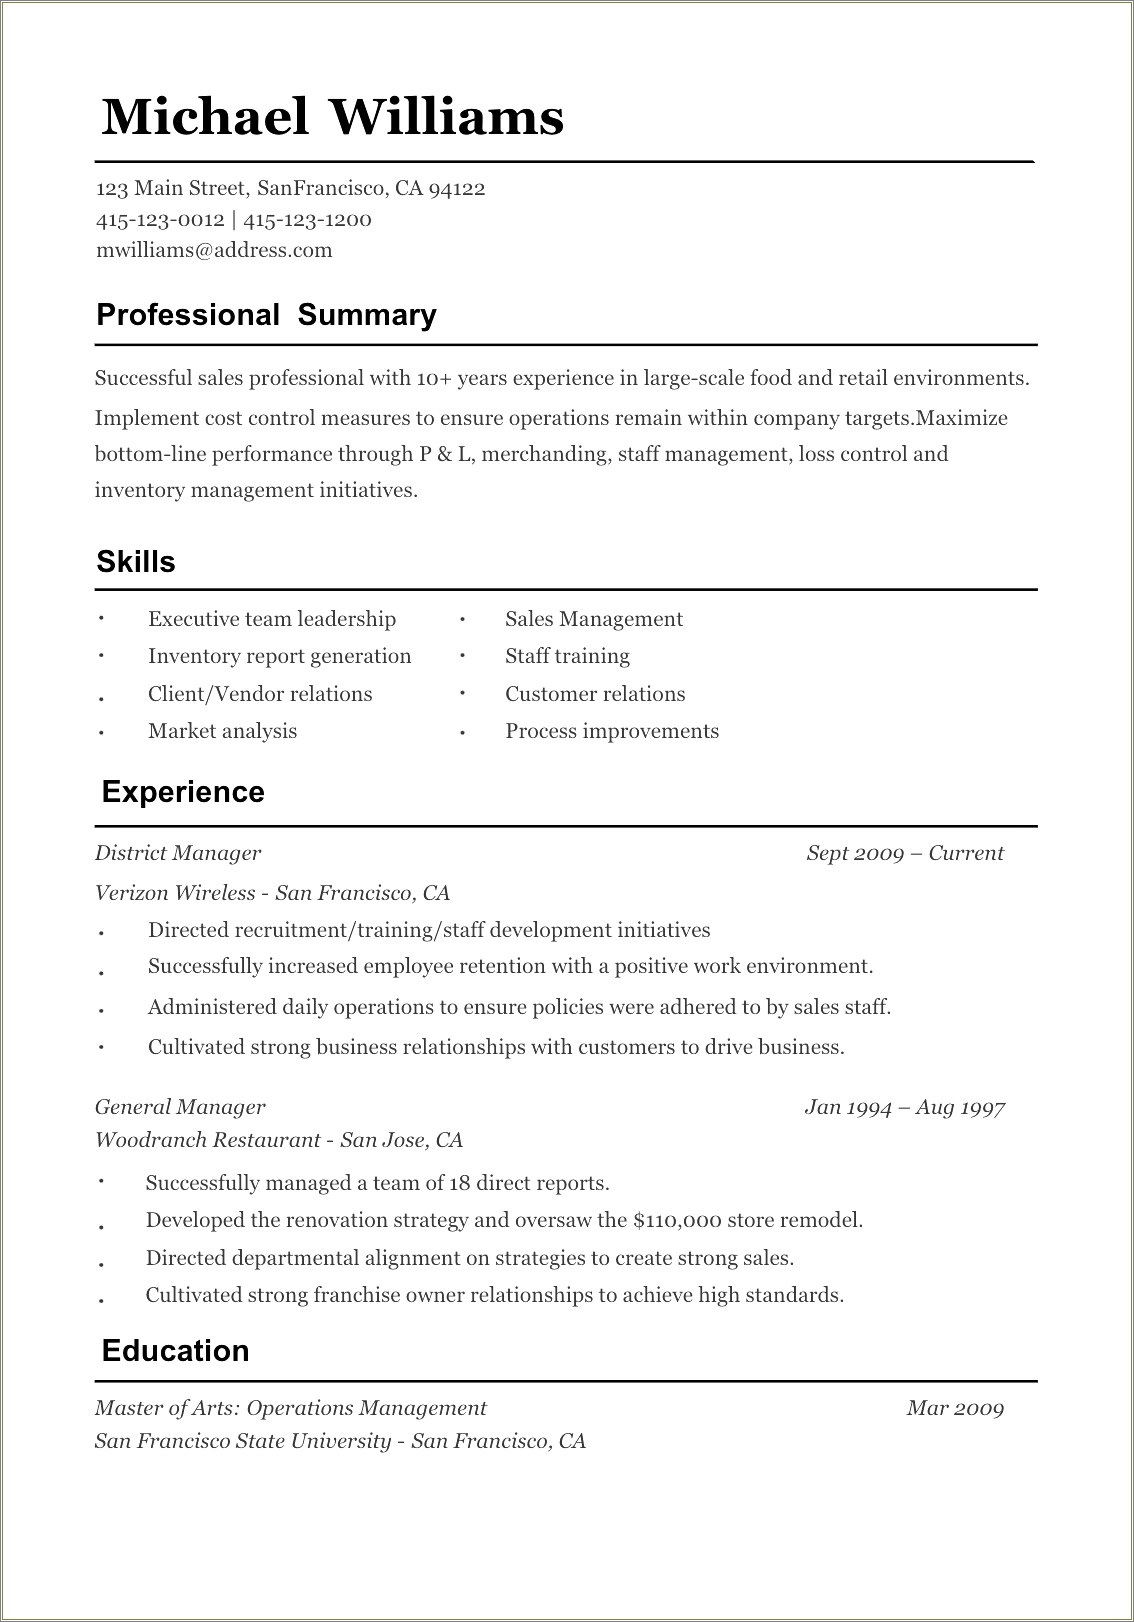 Description For Resume For Office Assistant